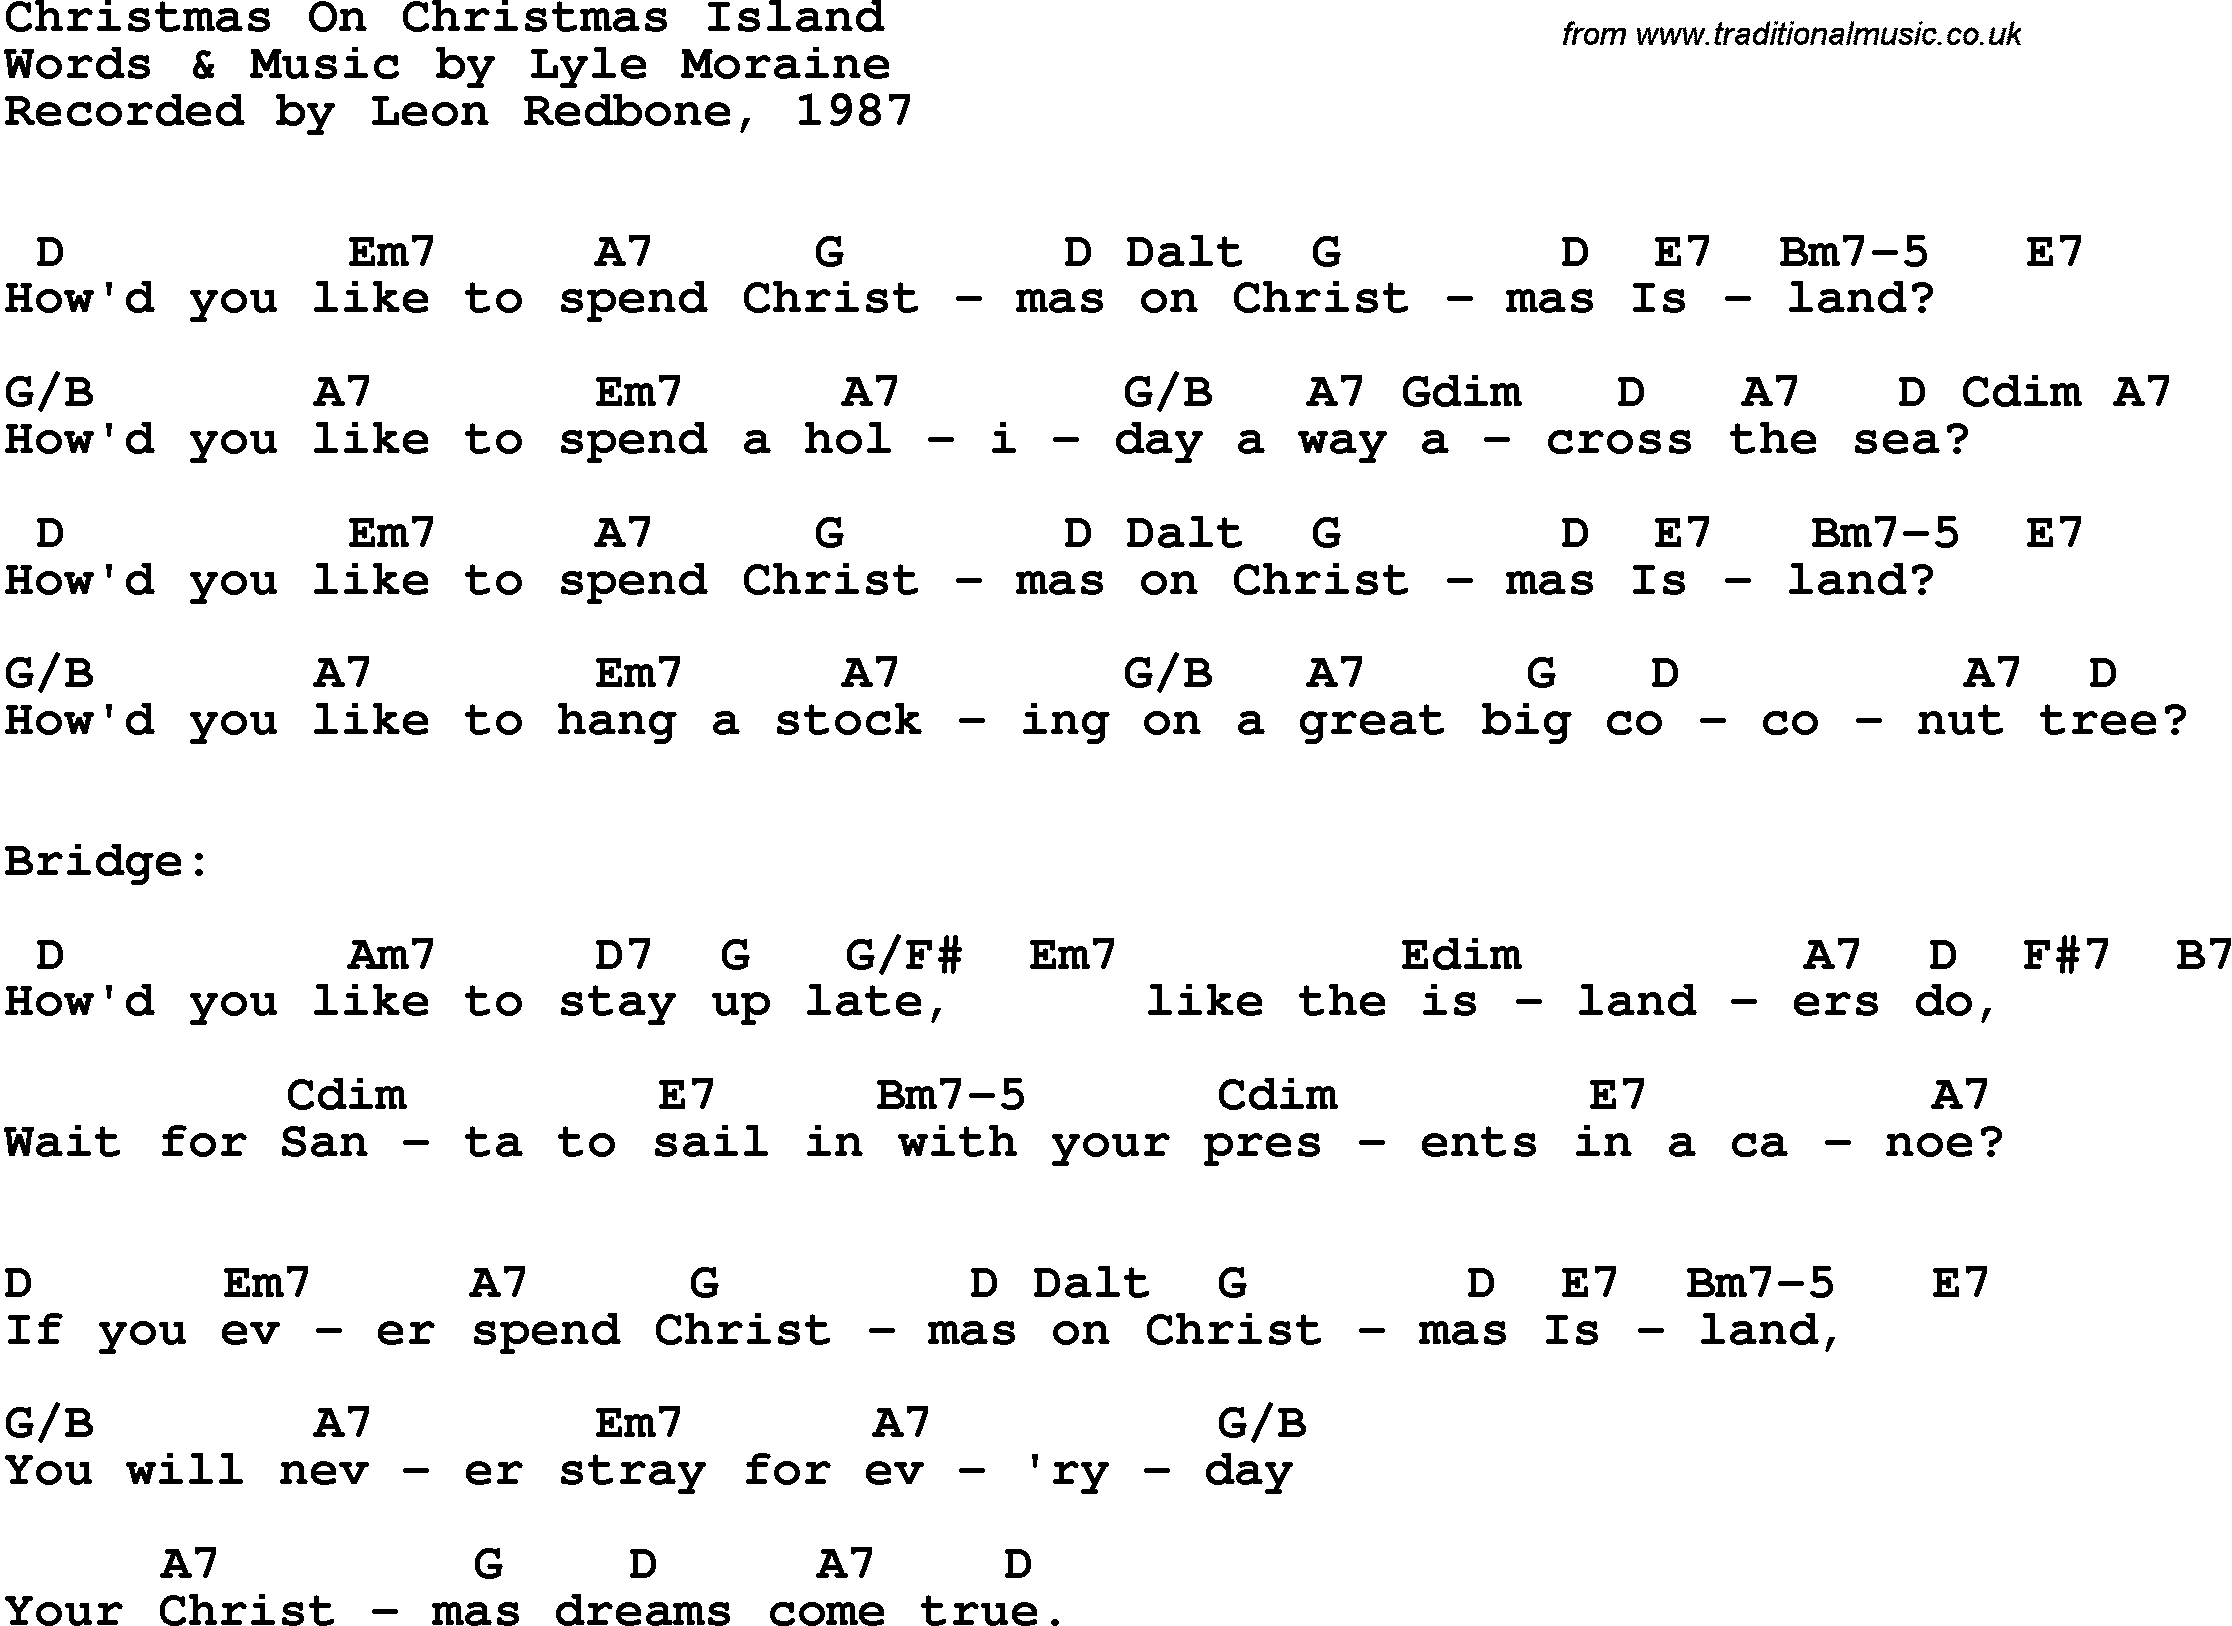 Song Lyrics with guitar chords for Christmas On Christmas Island - Leon Redbone, 1987